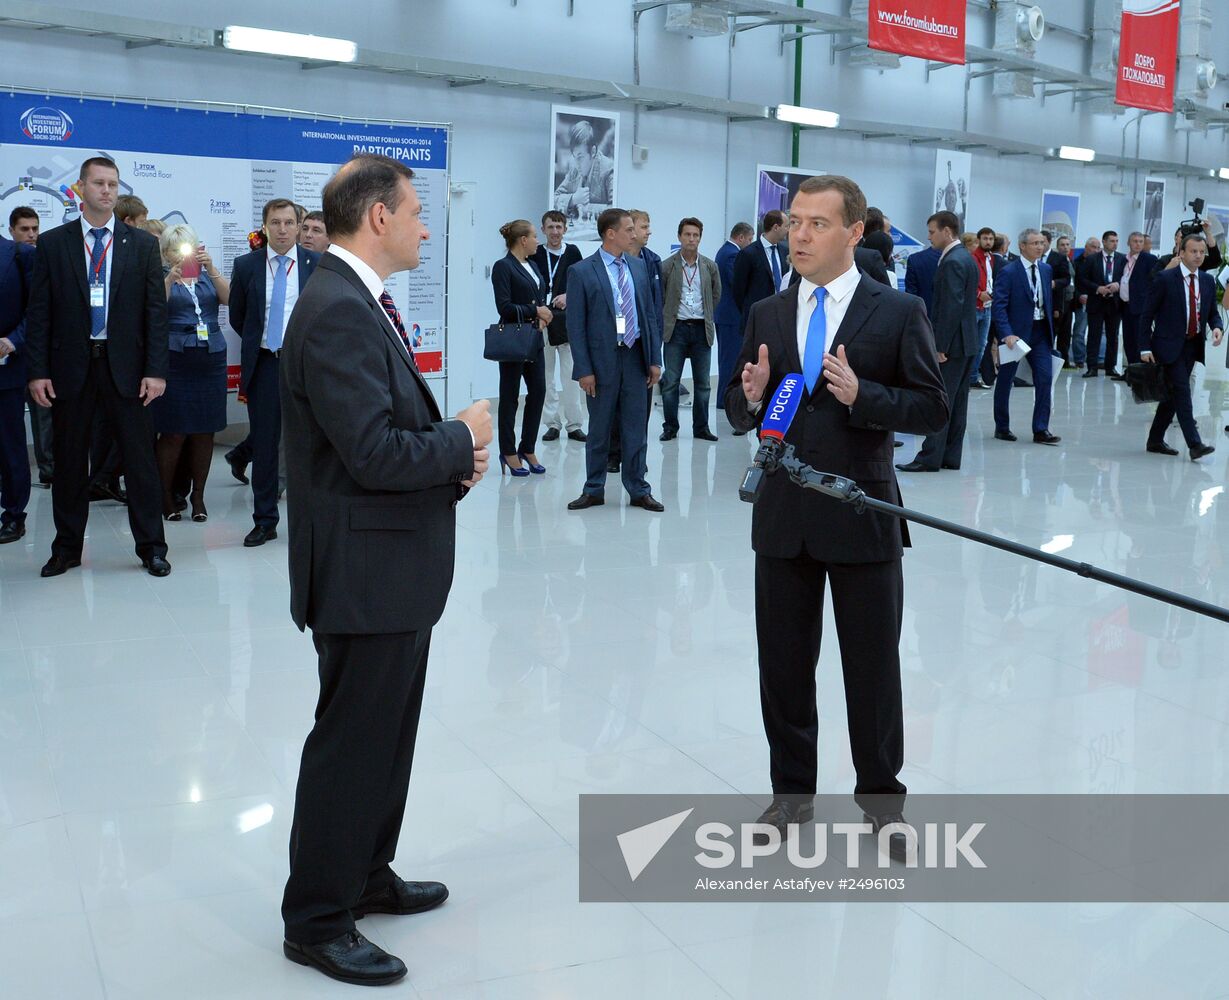 Dmitry Medvedev attends Sochi 2014 International Investment Forum